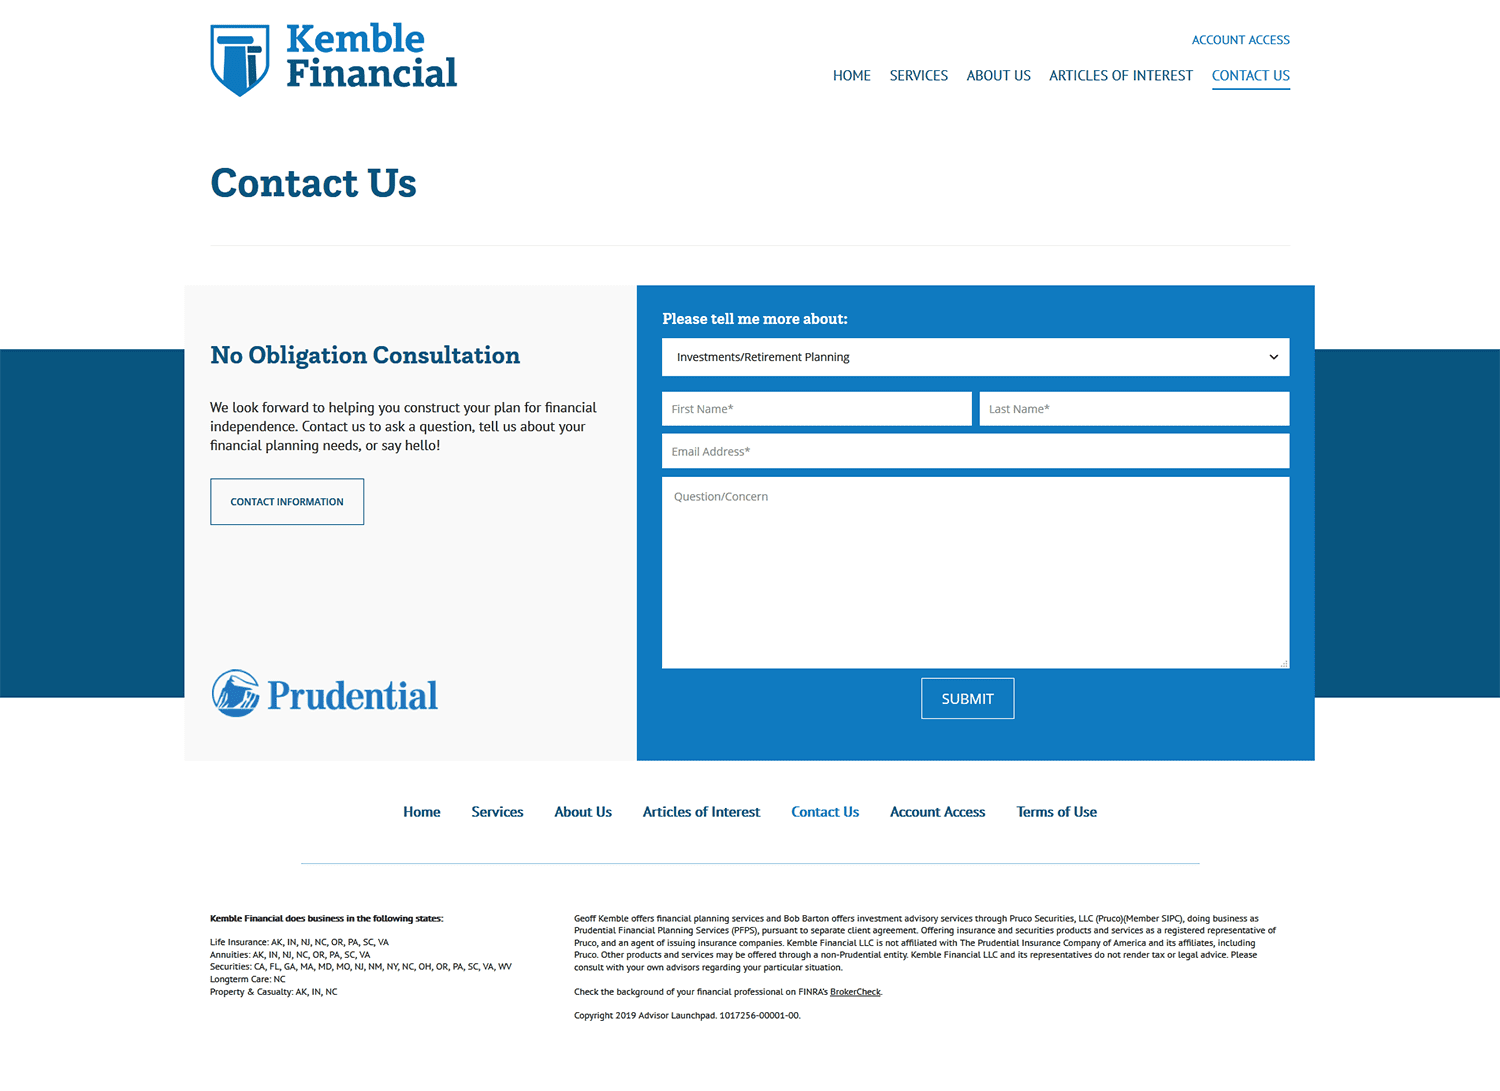 Kemble Financial website contact page screenshot